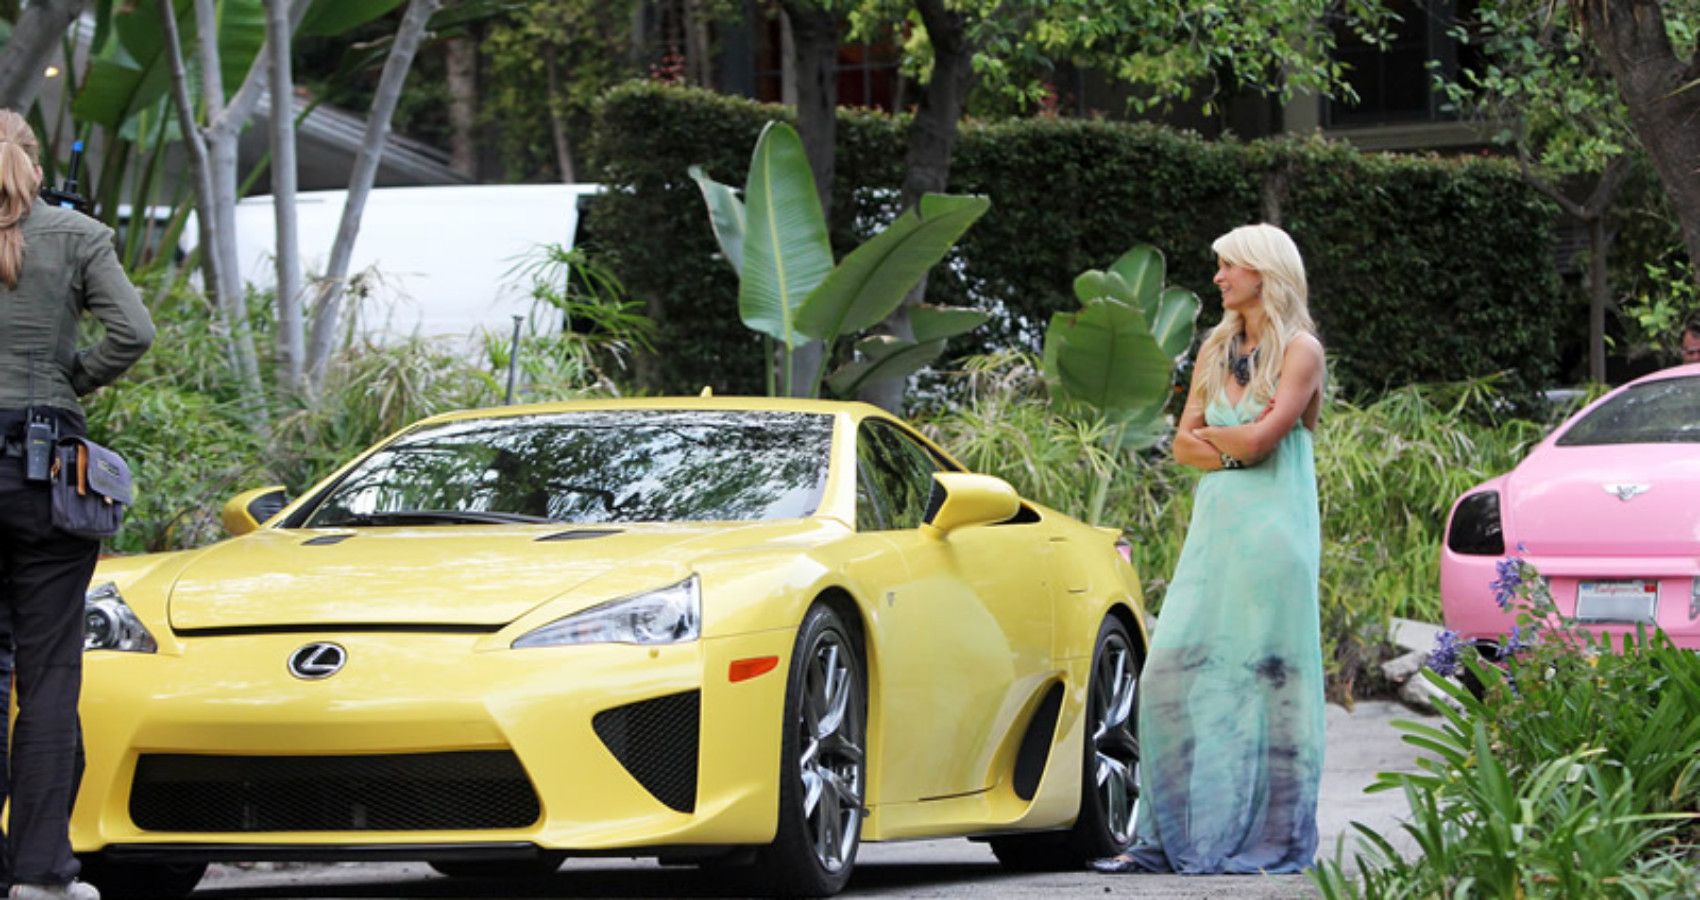 Paris Hilton With Her Banana Yellow Lexus LFA